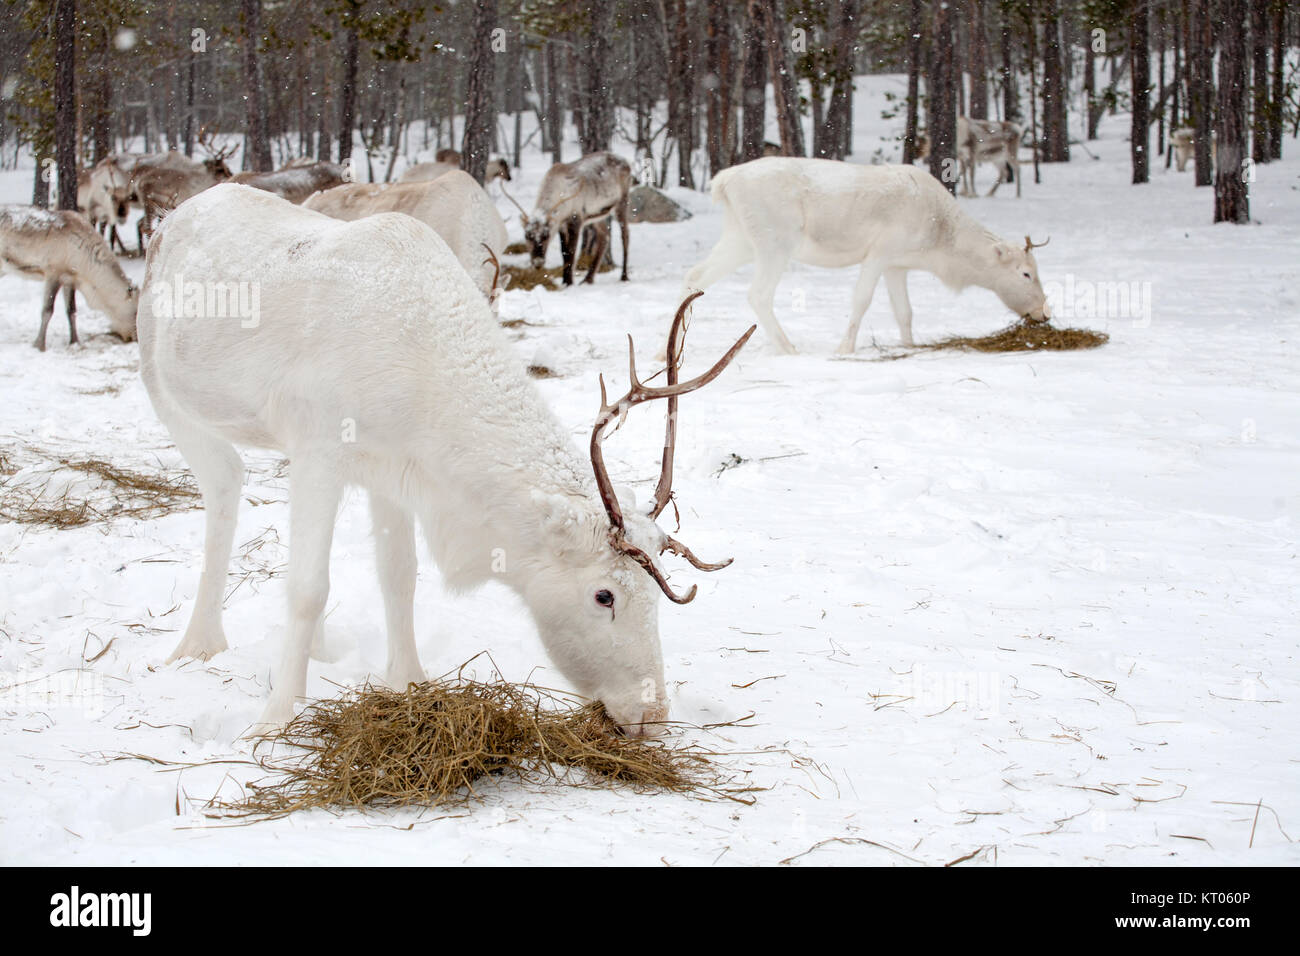 White Reindeer, foraging, snow, Inari, Finland Stock Photo